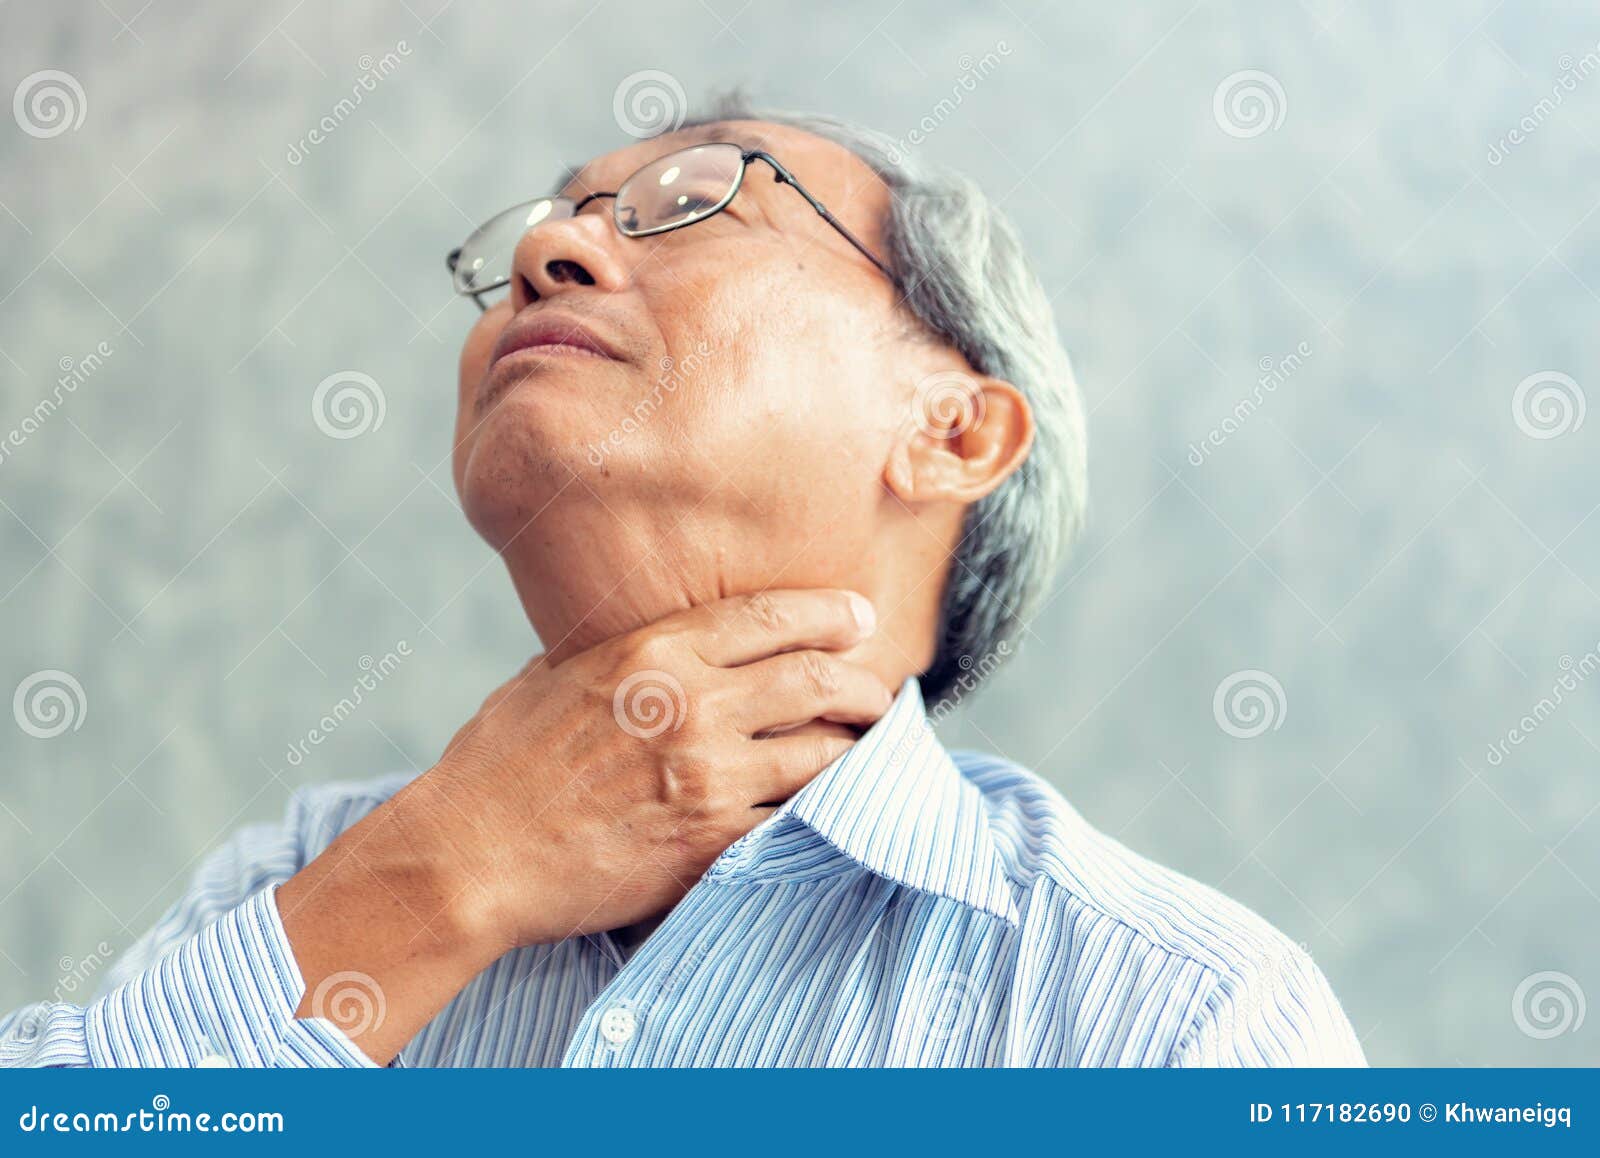 portrait of senior man touching his neck and having throat irritation